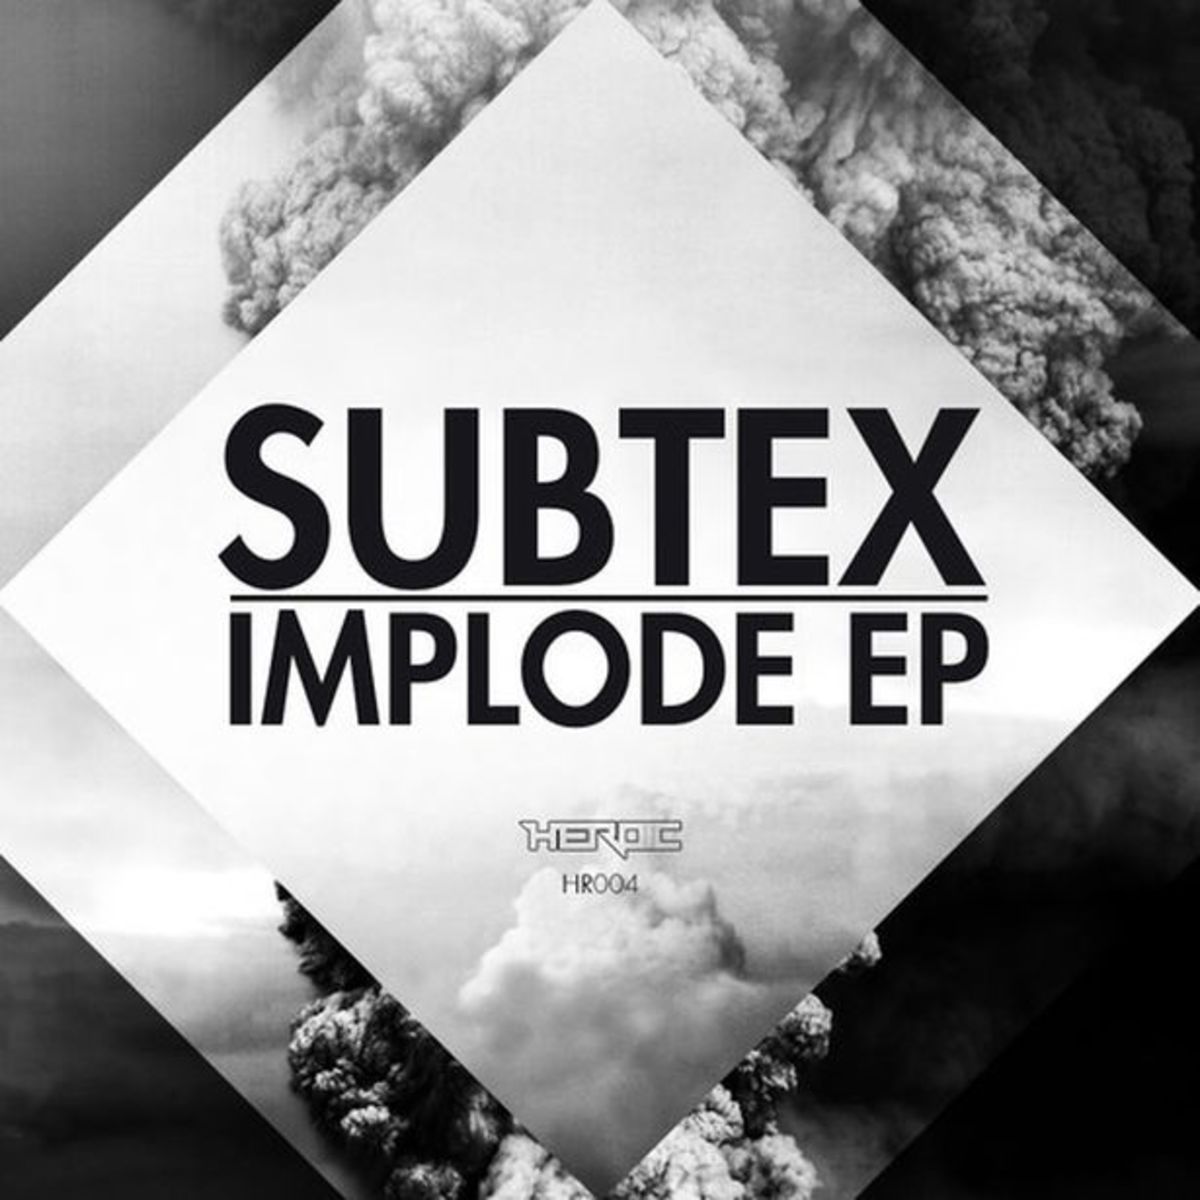 EDM Dowload: Subtex - Implode EP; File Under Bassnectar Meets Mitis Meets The Glitch Mob